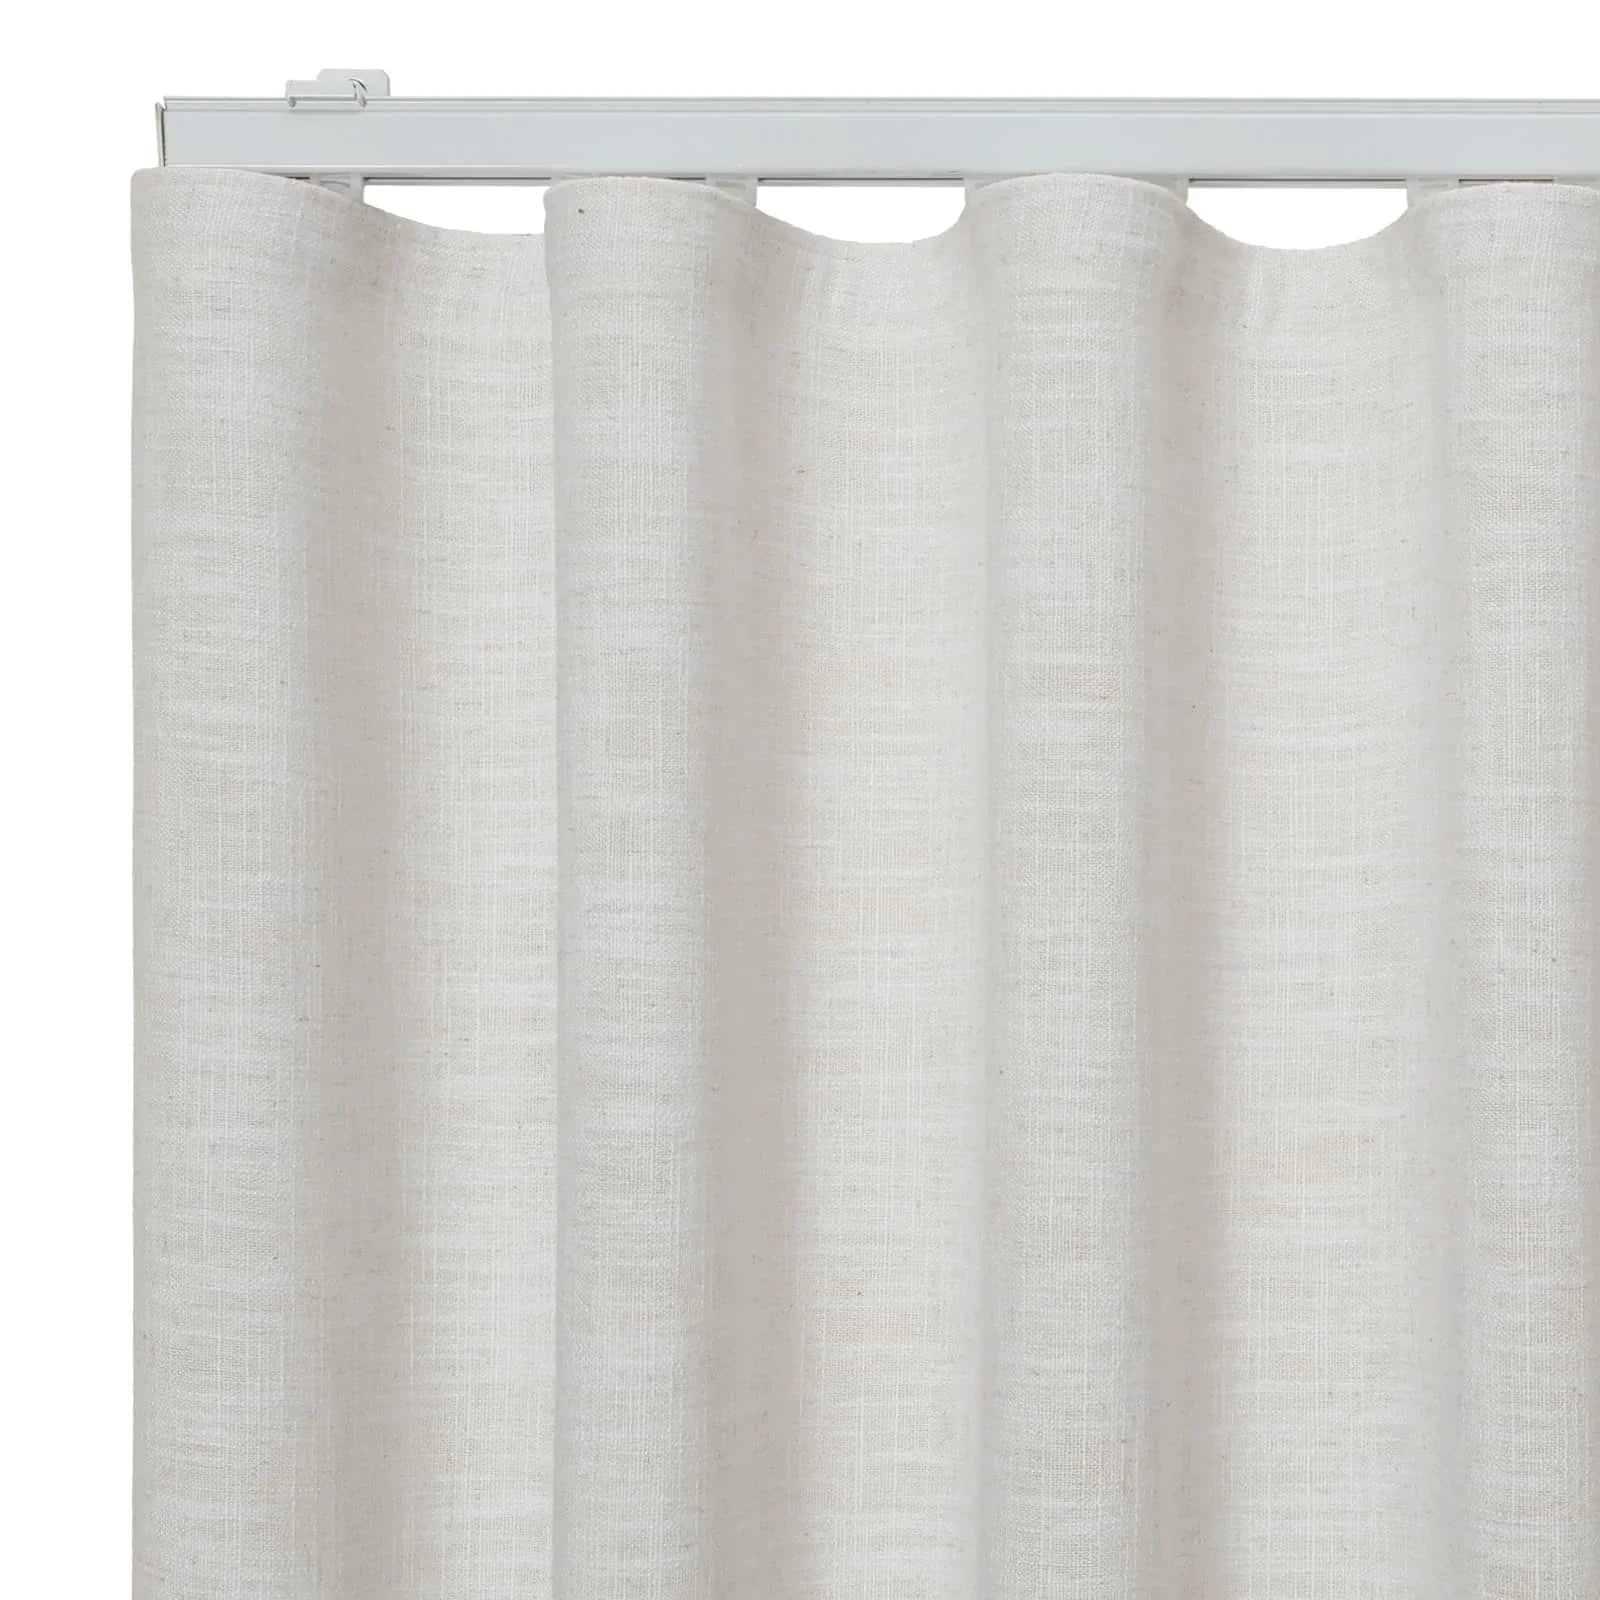 Loomy Premium Linen Blackout Curtain Living Room Ripple Fold Drapery Track Set 